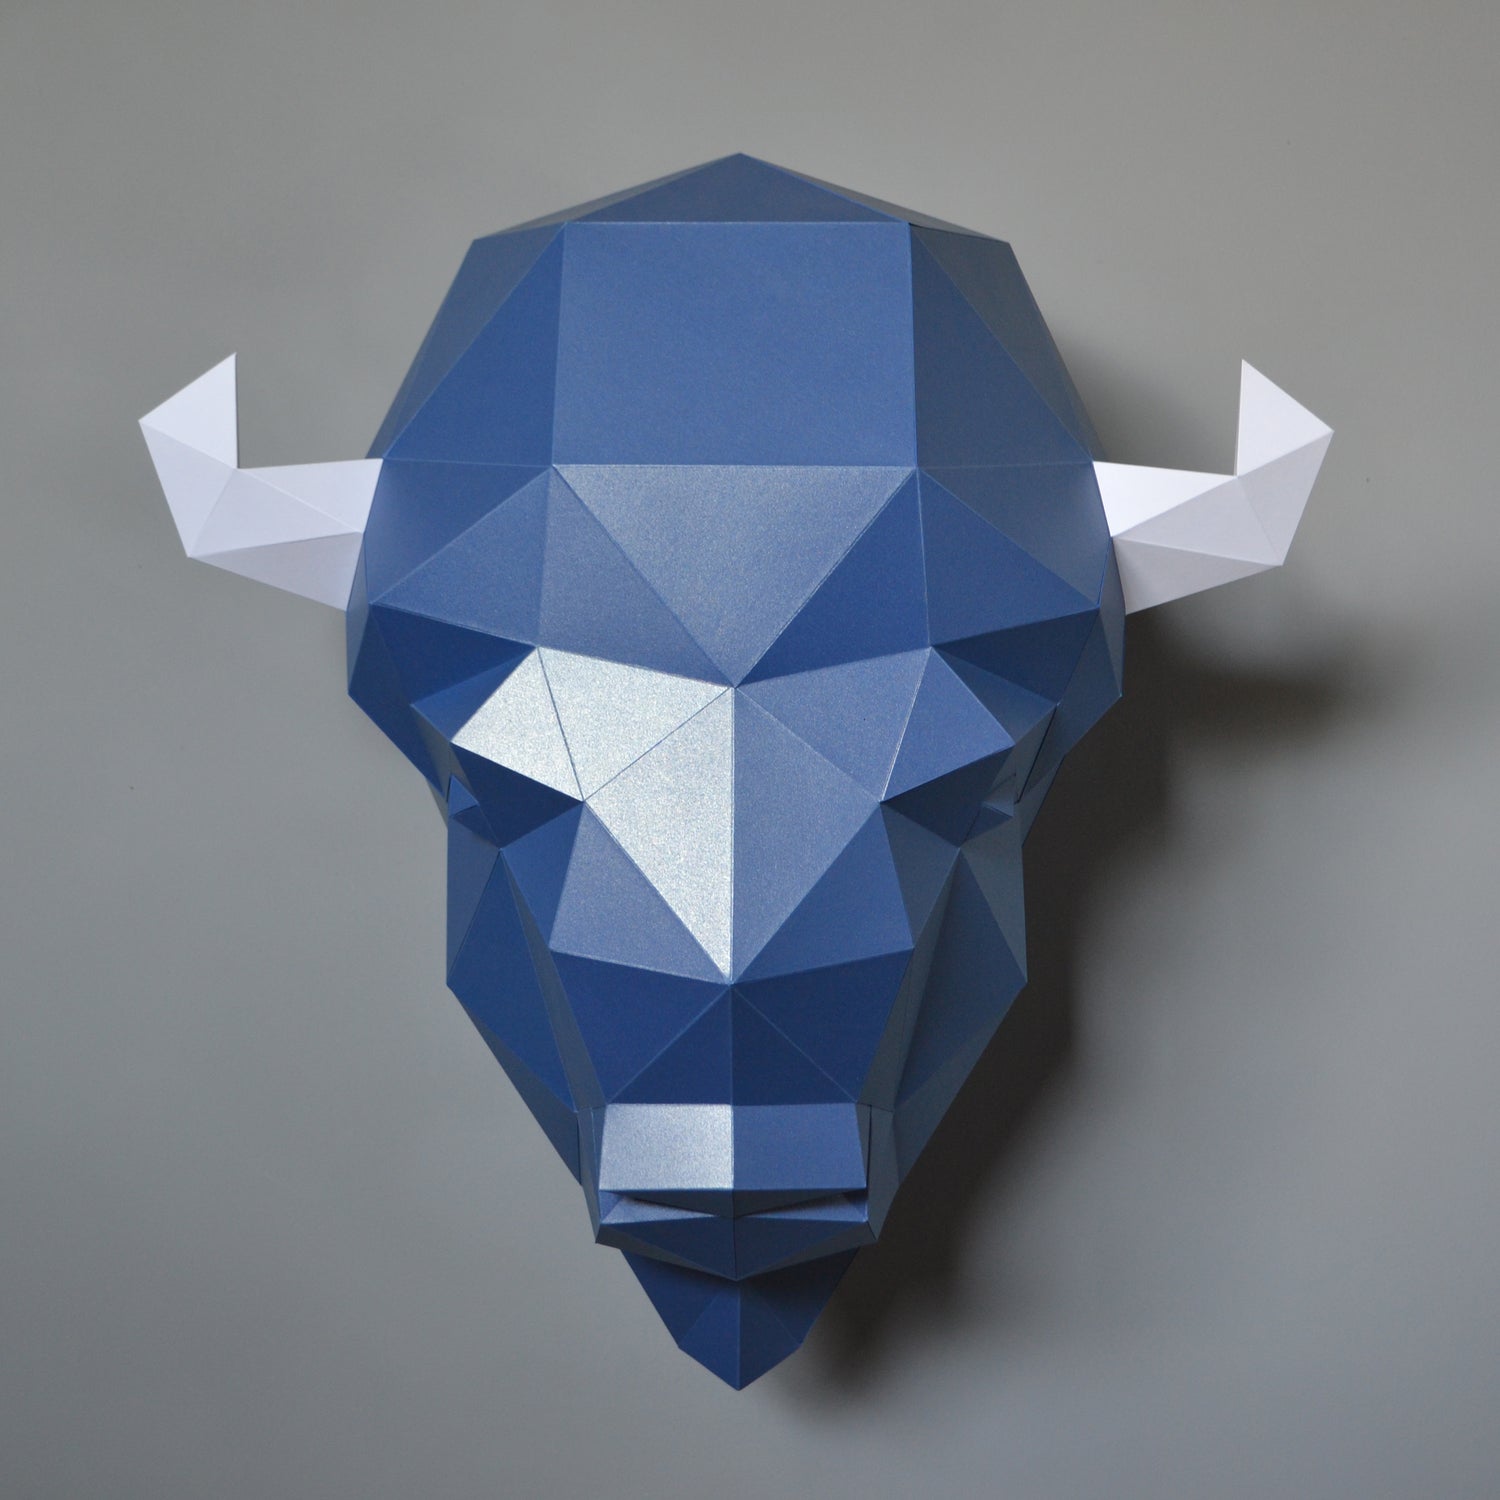 Gabriel the Buffalo | DIY Paper Craft Animal Kit